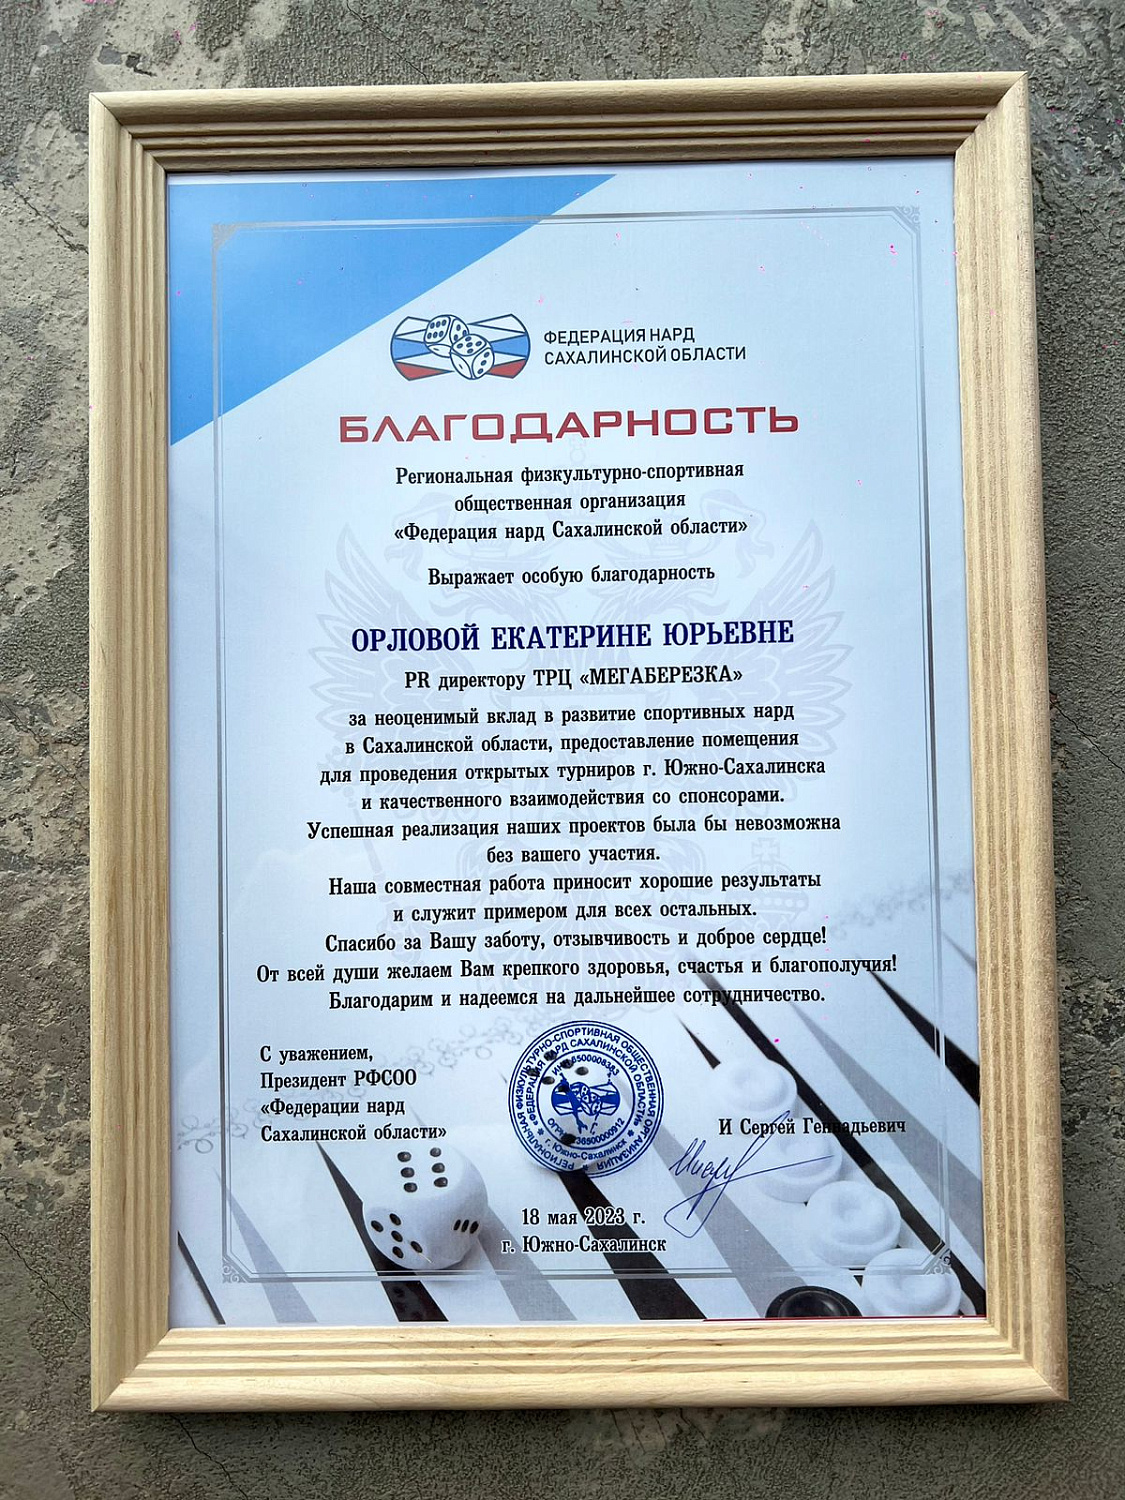 Федерация нард Сахалинской области наградила Мегаберёзку